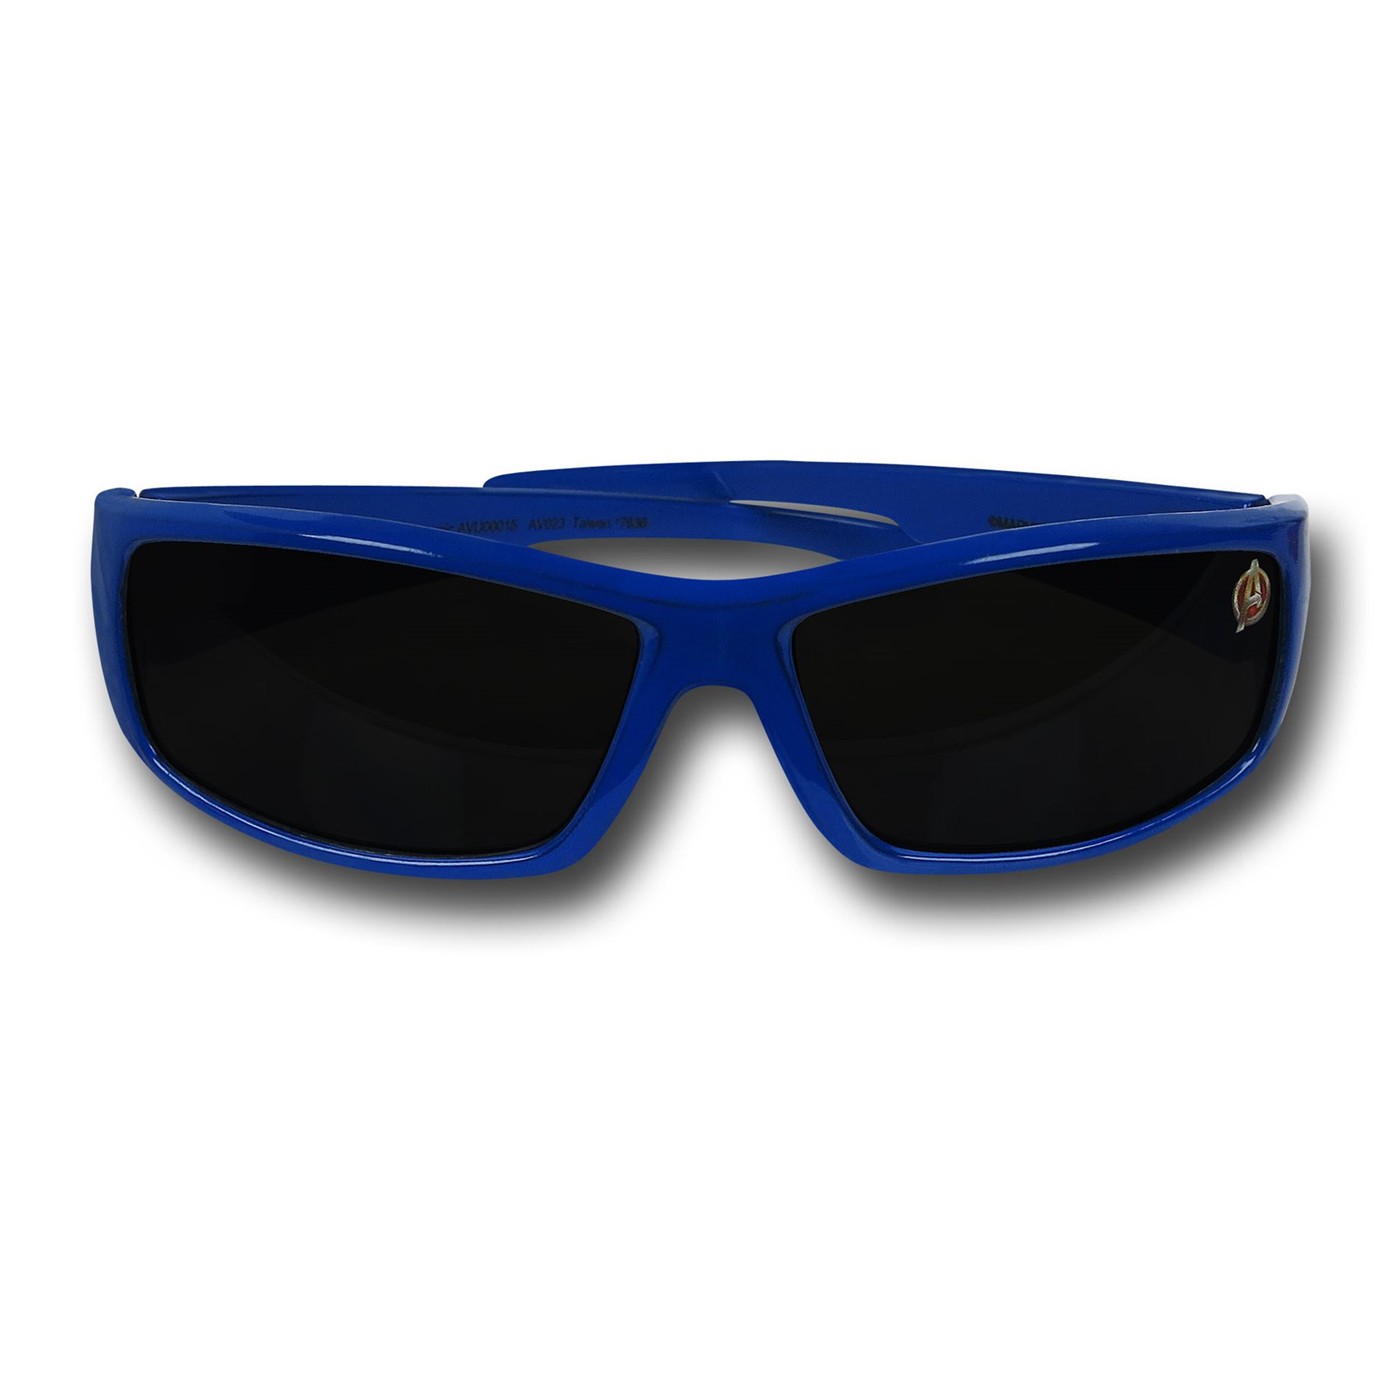 Avengers Blue Kids Sunglasses